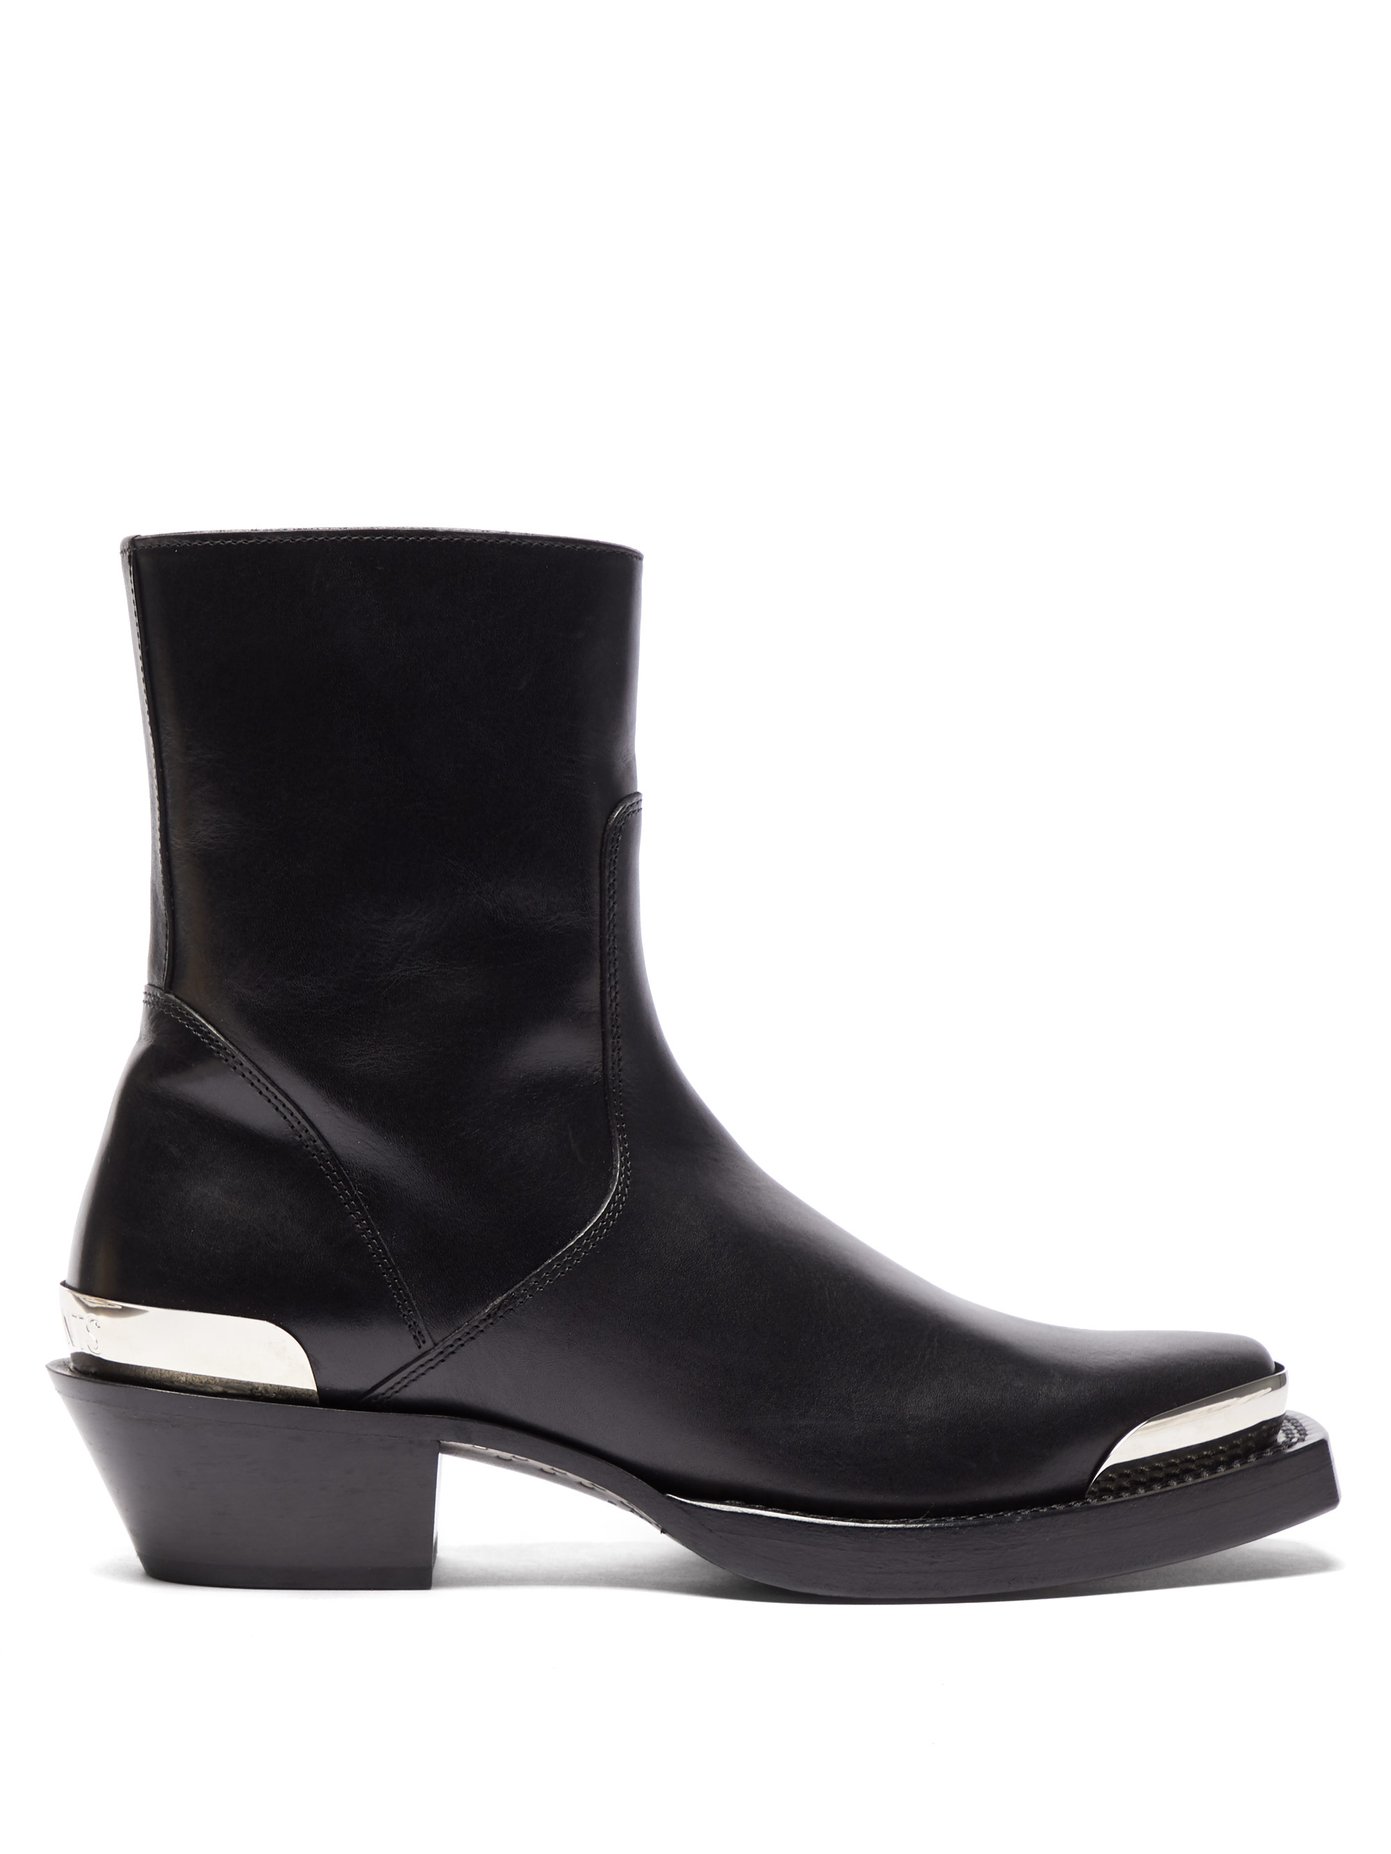 Texan toe-cap leather boots | Vetements 